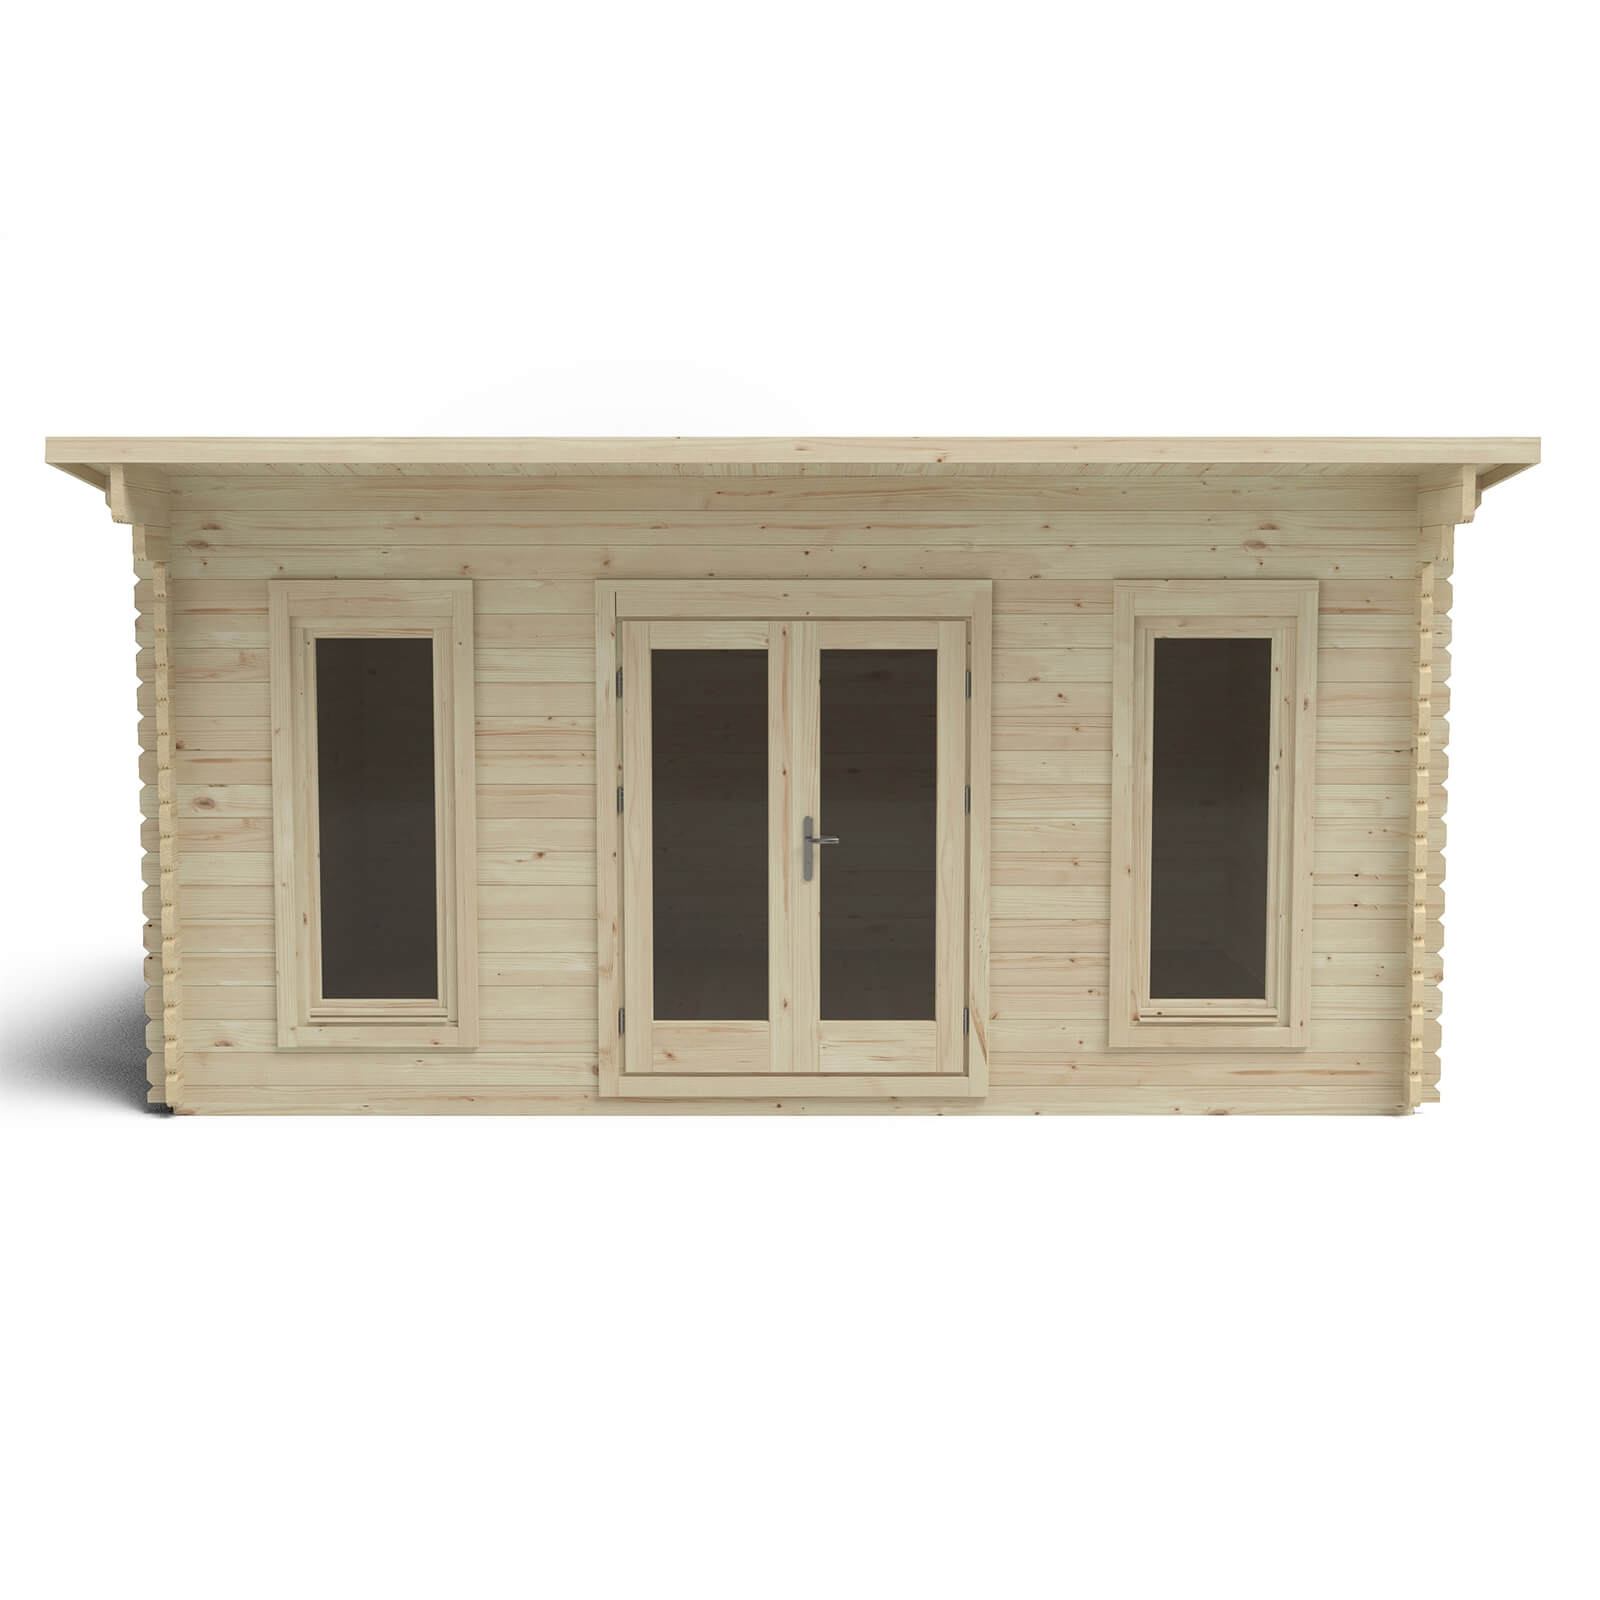 Forest Mendip 5.0m x 4.0m Log Cabin Double Glazed, 24kg Polyester Felt, No Underlay - Installation Included